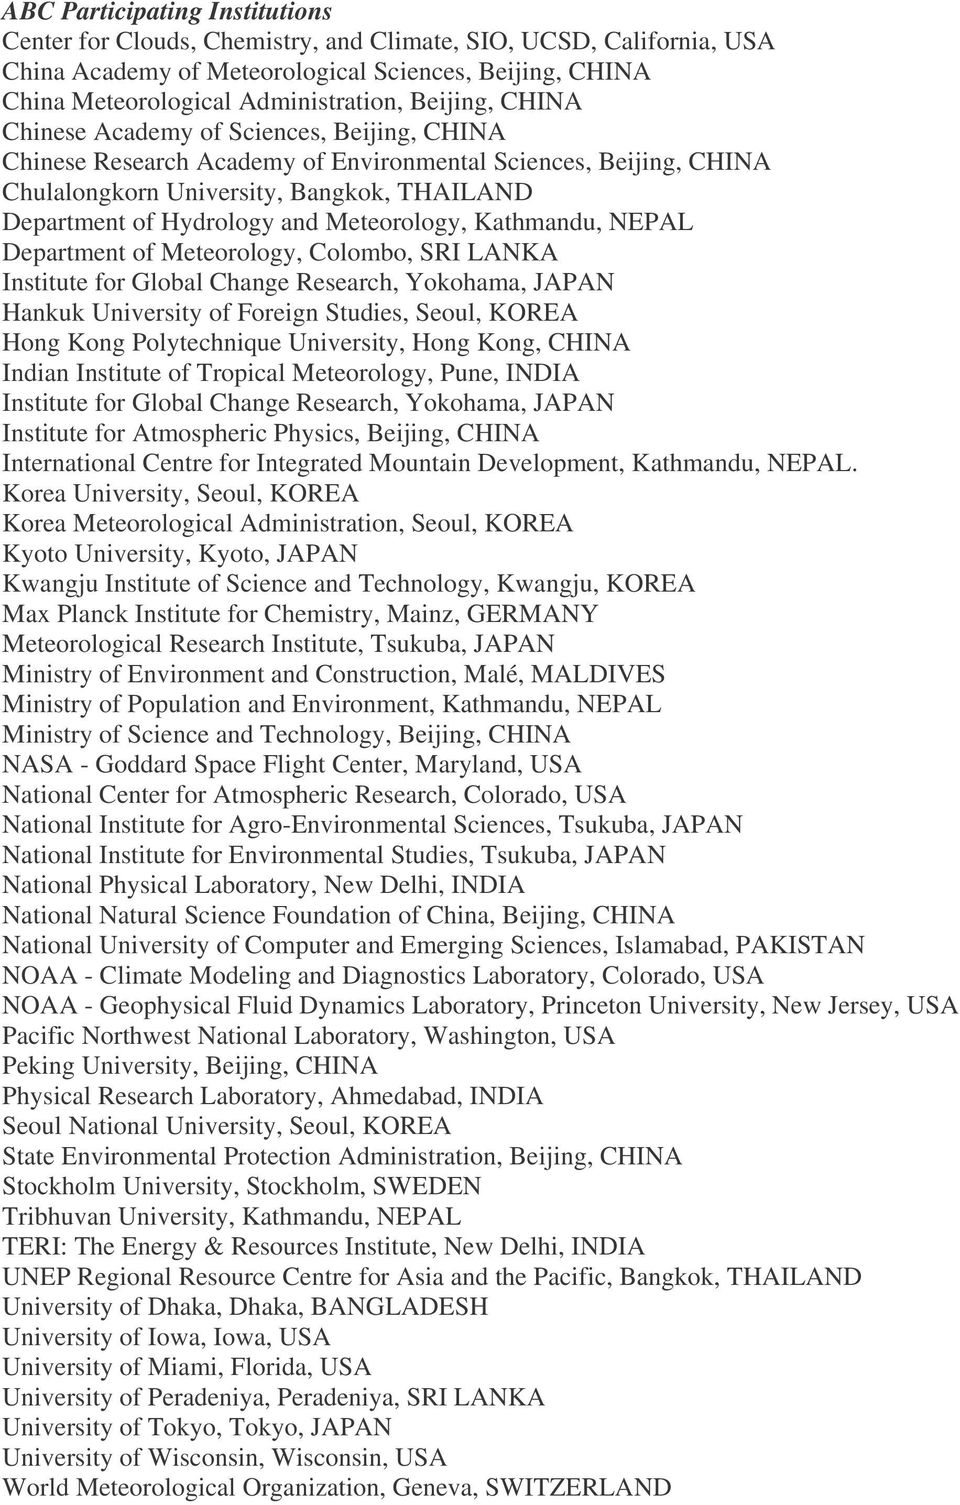 Meteorology, Kathmandu, NEPAL Department of Meteorology, Colombo, SRI LANKA Institute for Global Change Research, Yokohama, JAPAN Hankuk University of Foreign Studies, Seoul, KOREA Hong Kong